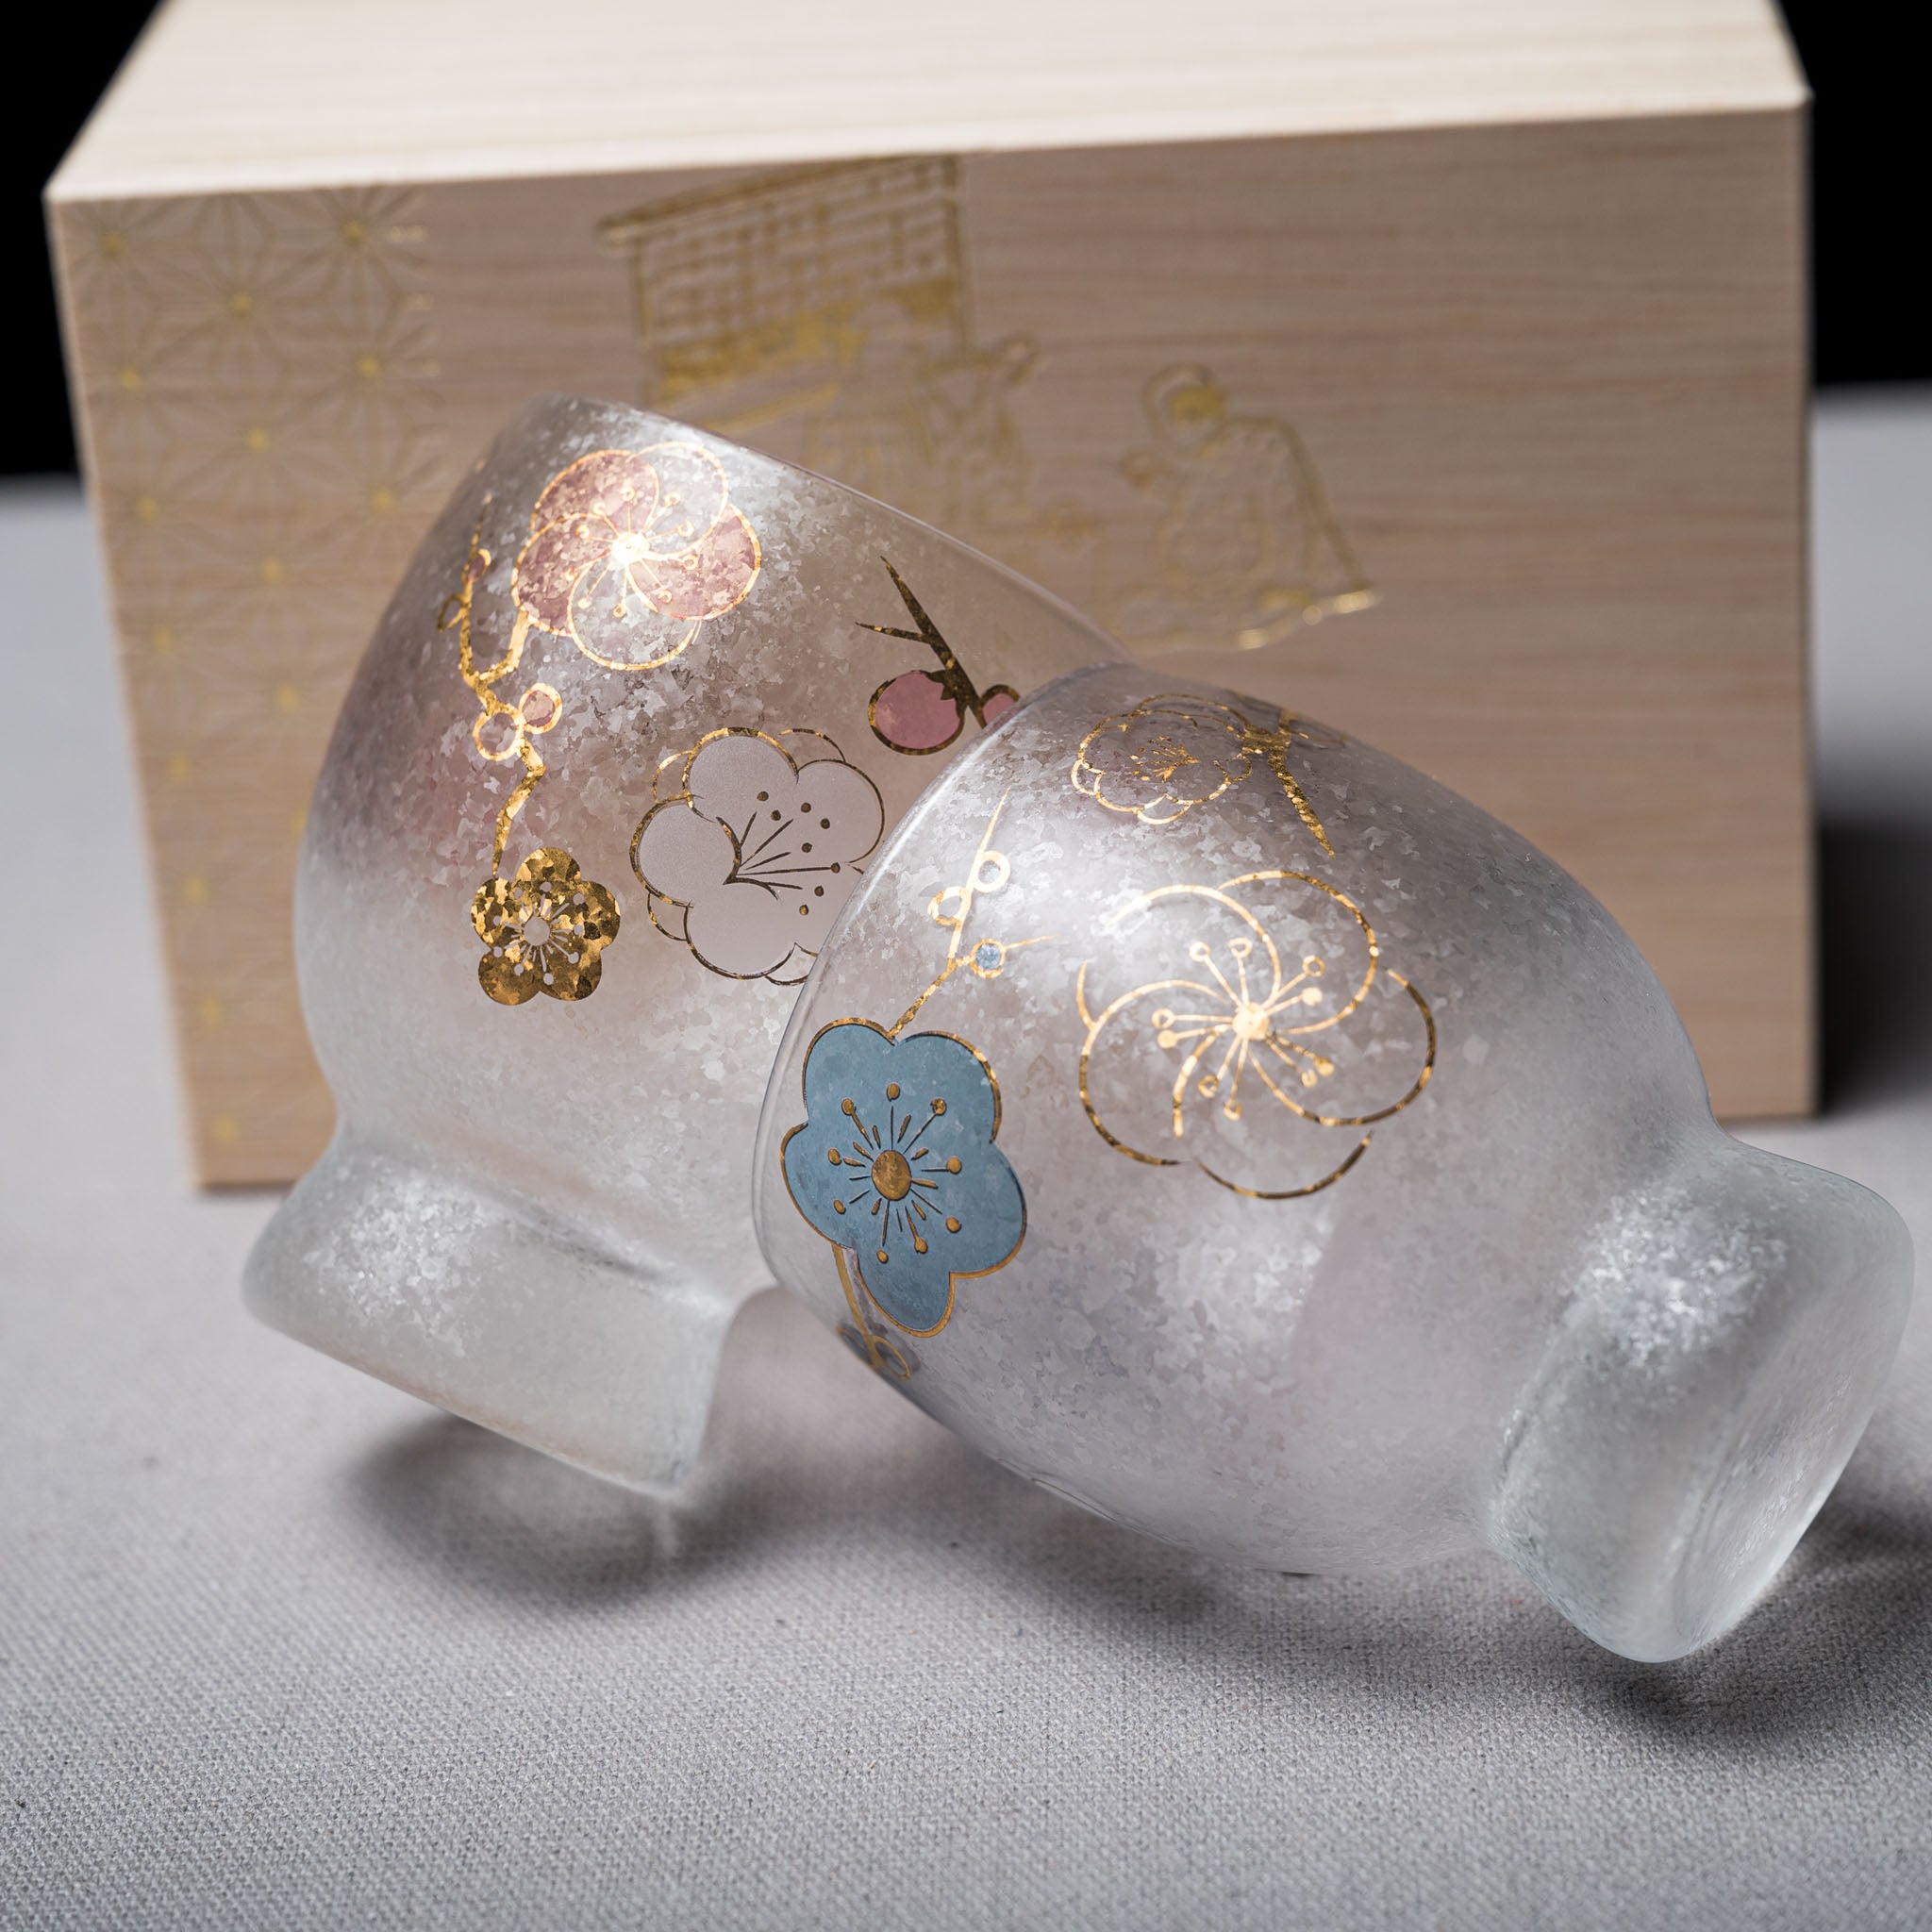 Nippon Taste Four Season - Pair Sake Glass / Plum